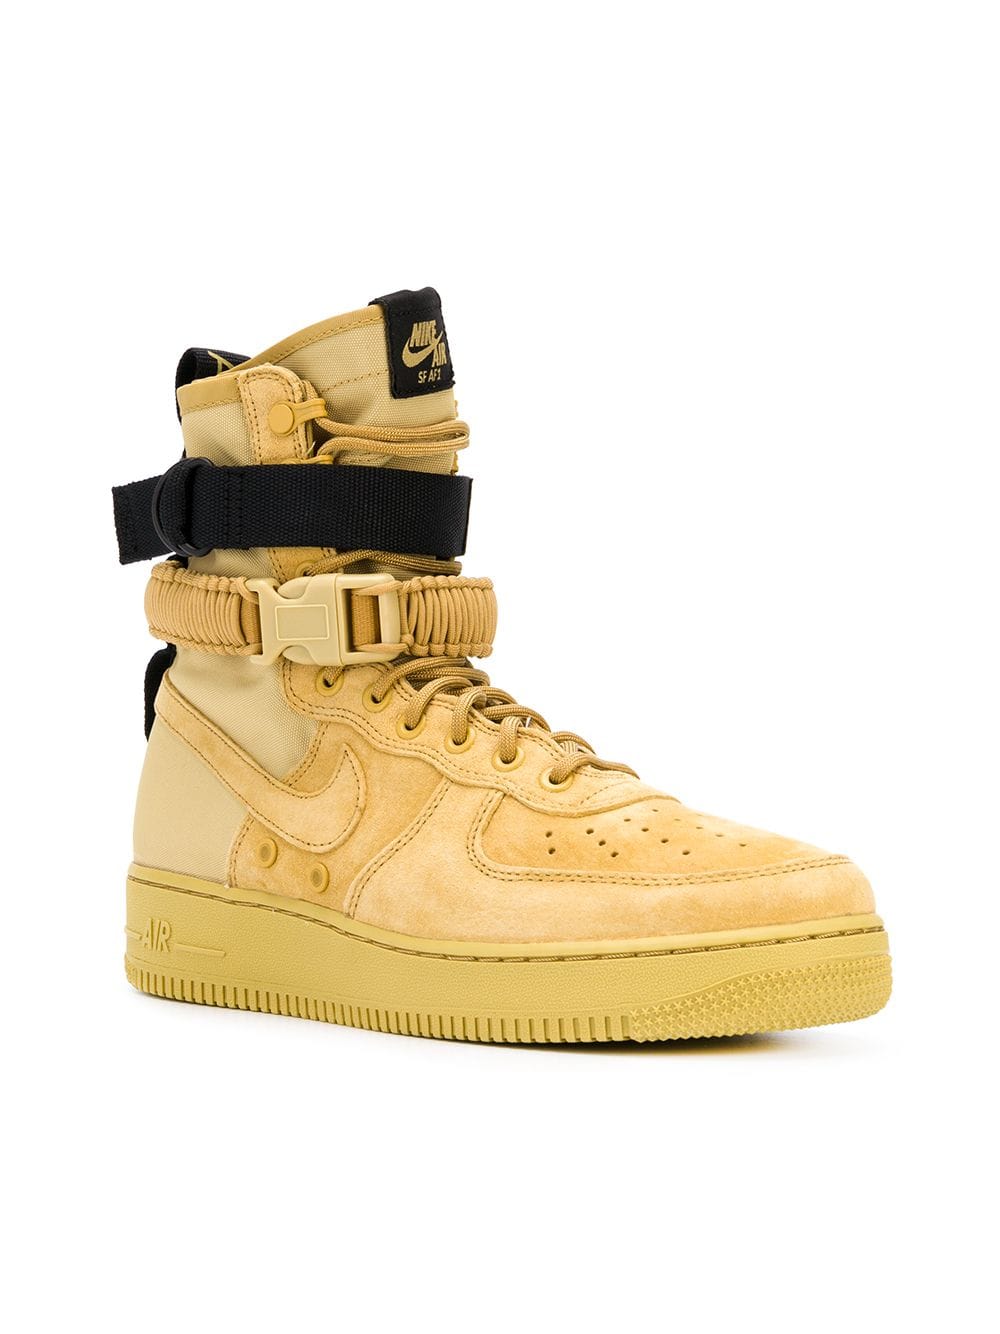 Nike SF Air Force 1 high top sneakers - Yellow - GLAMI.sk